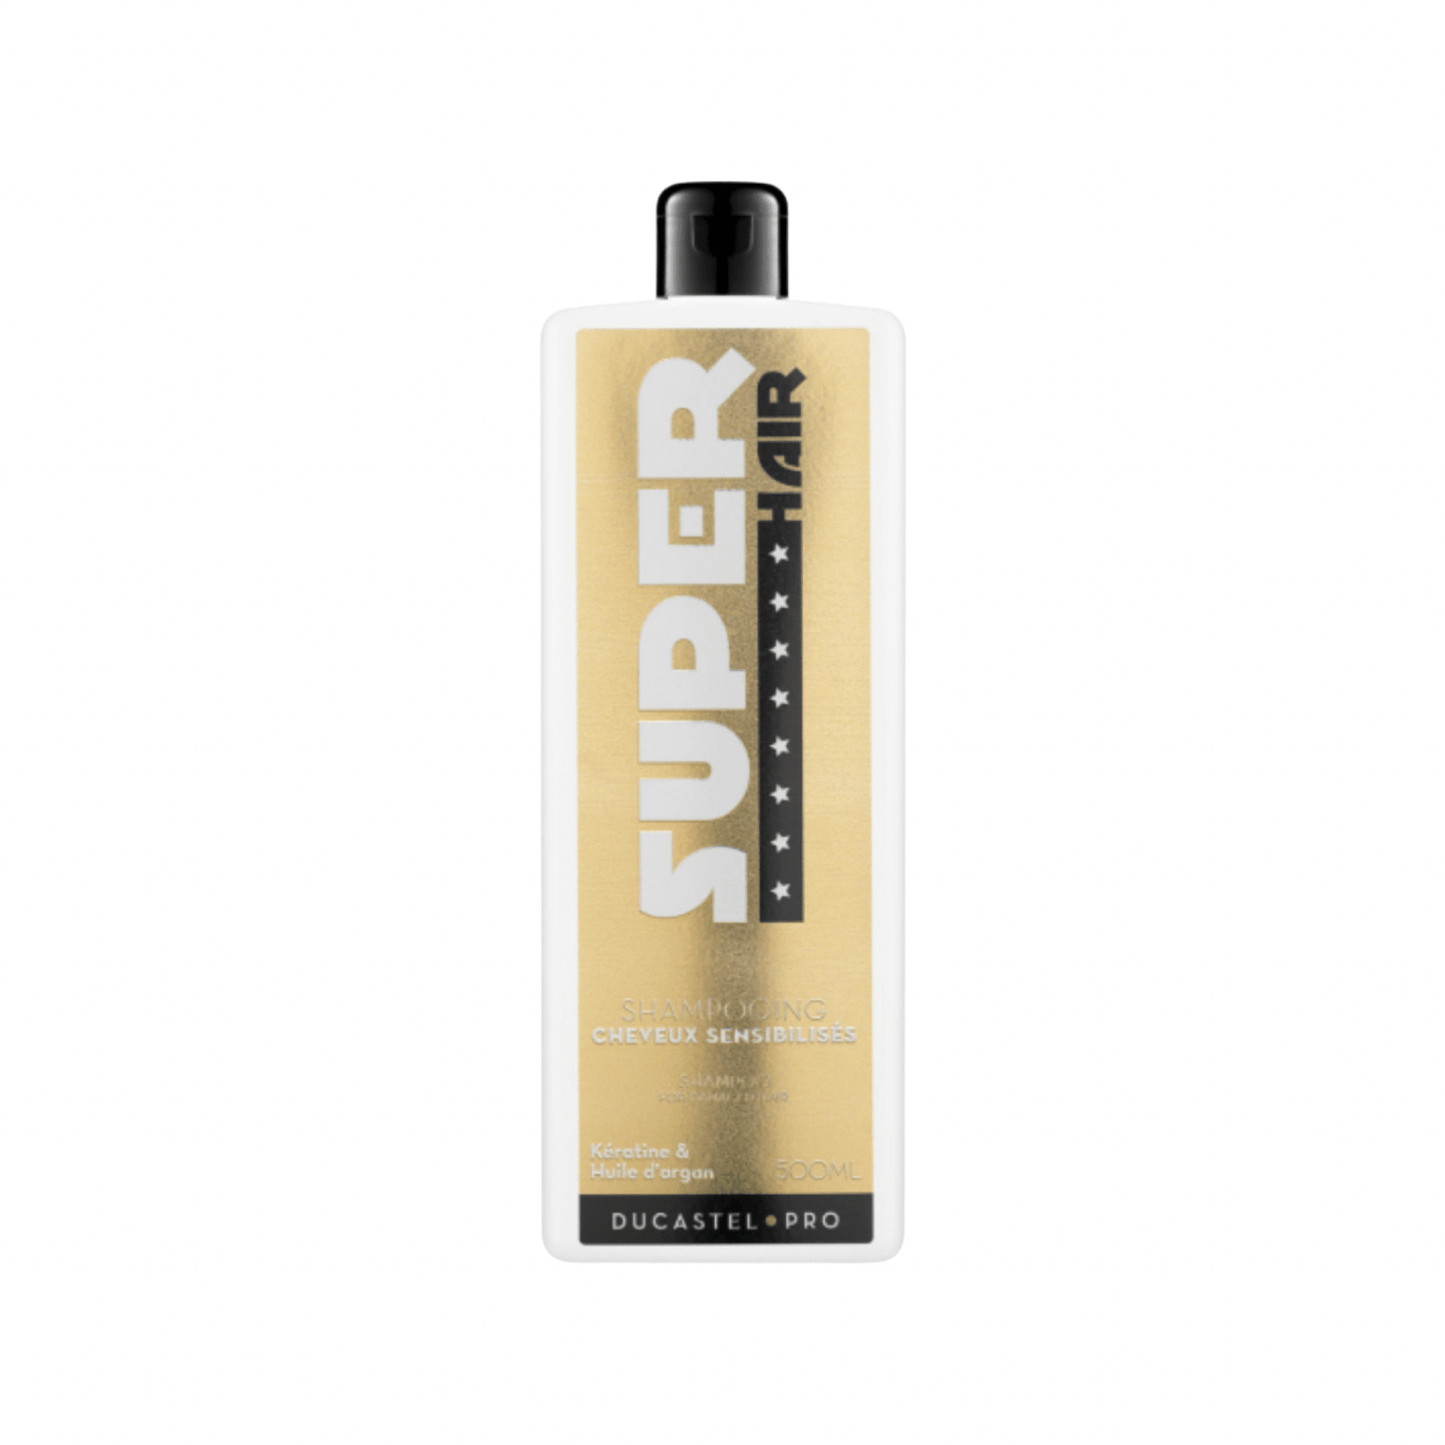 DucastelPro - Super hair shampoo